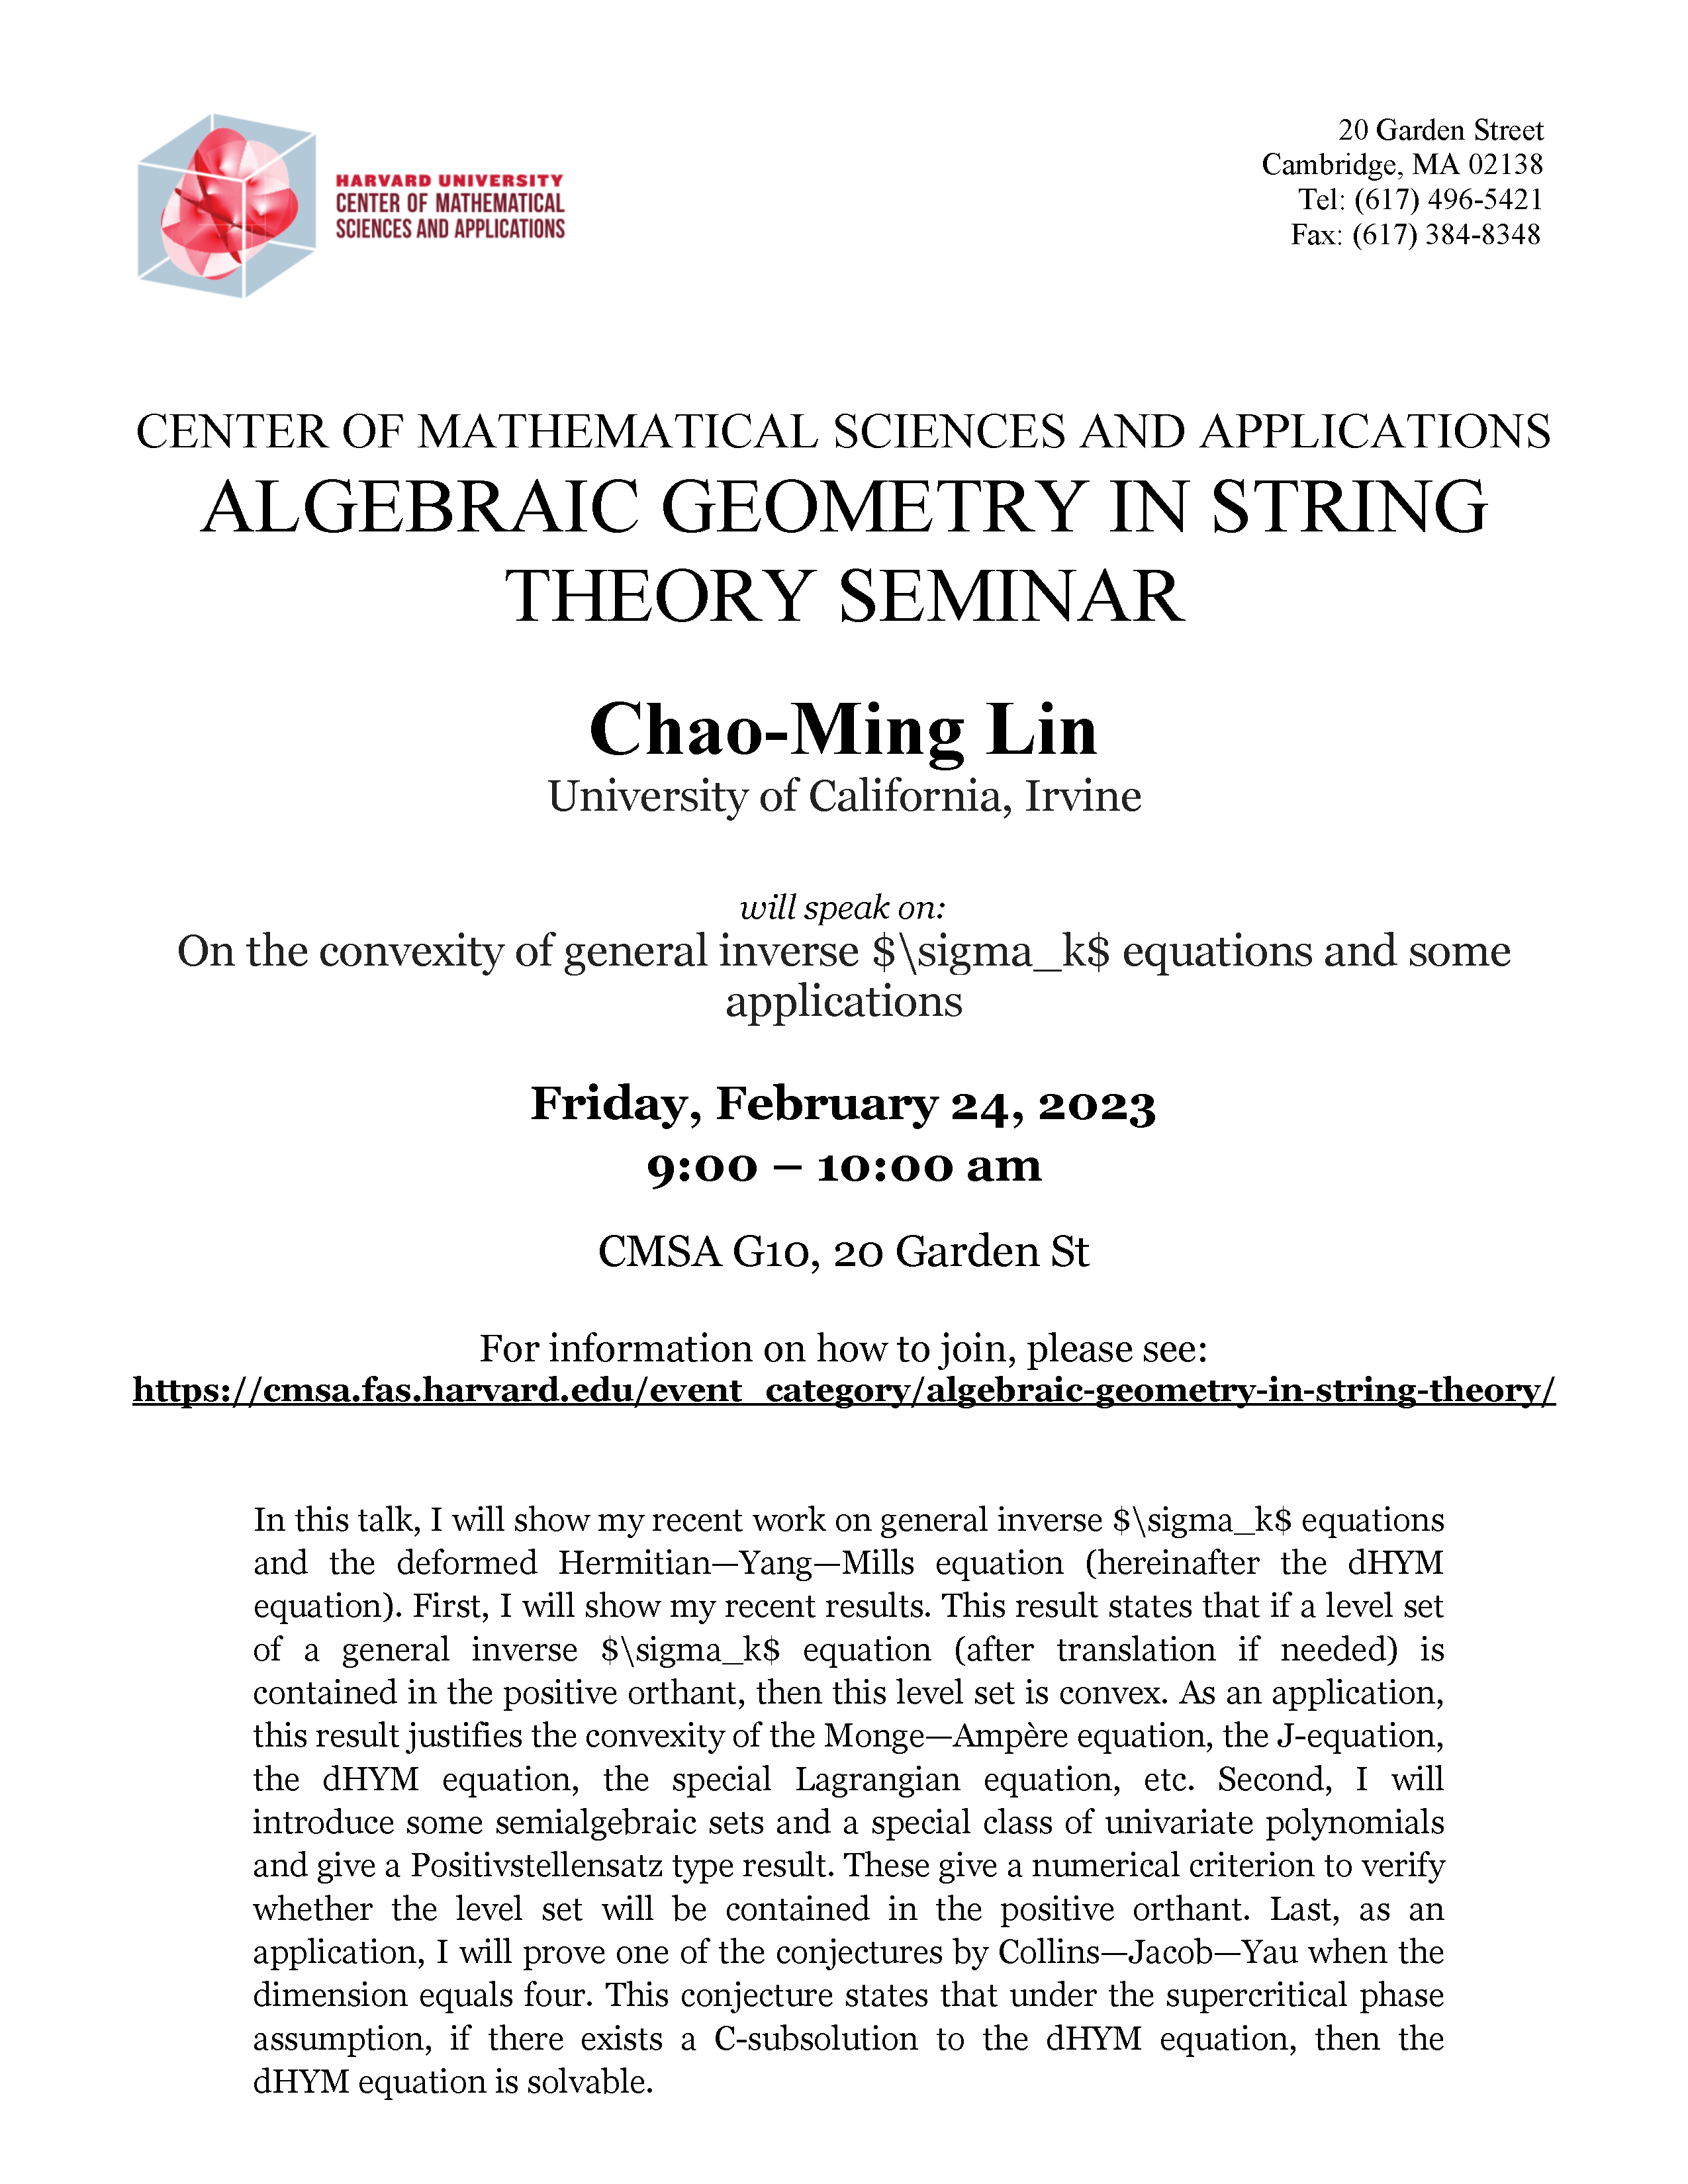 CMSA Algebraic Geometry in String Theory 02.24.2023